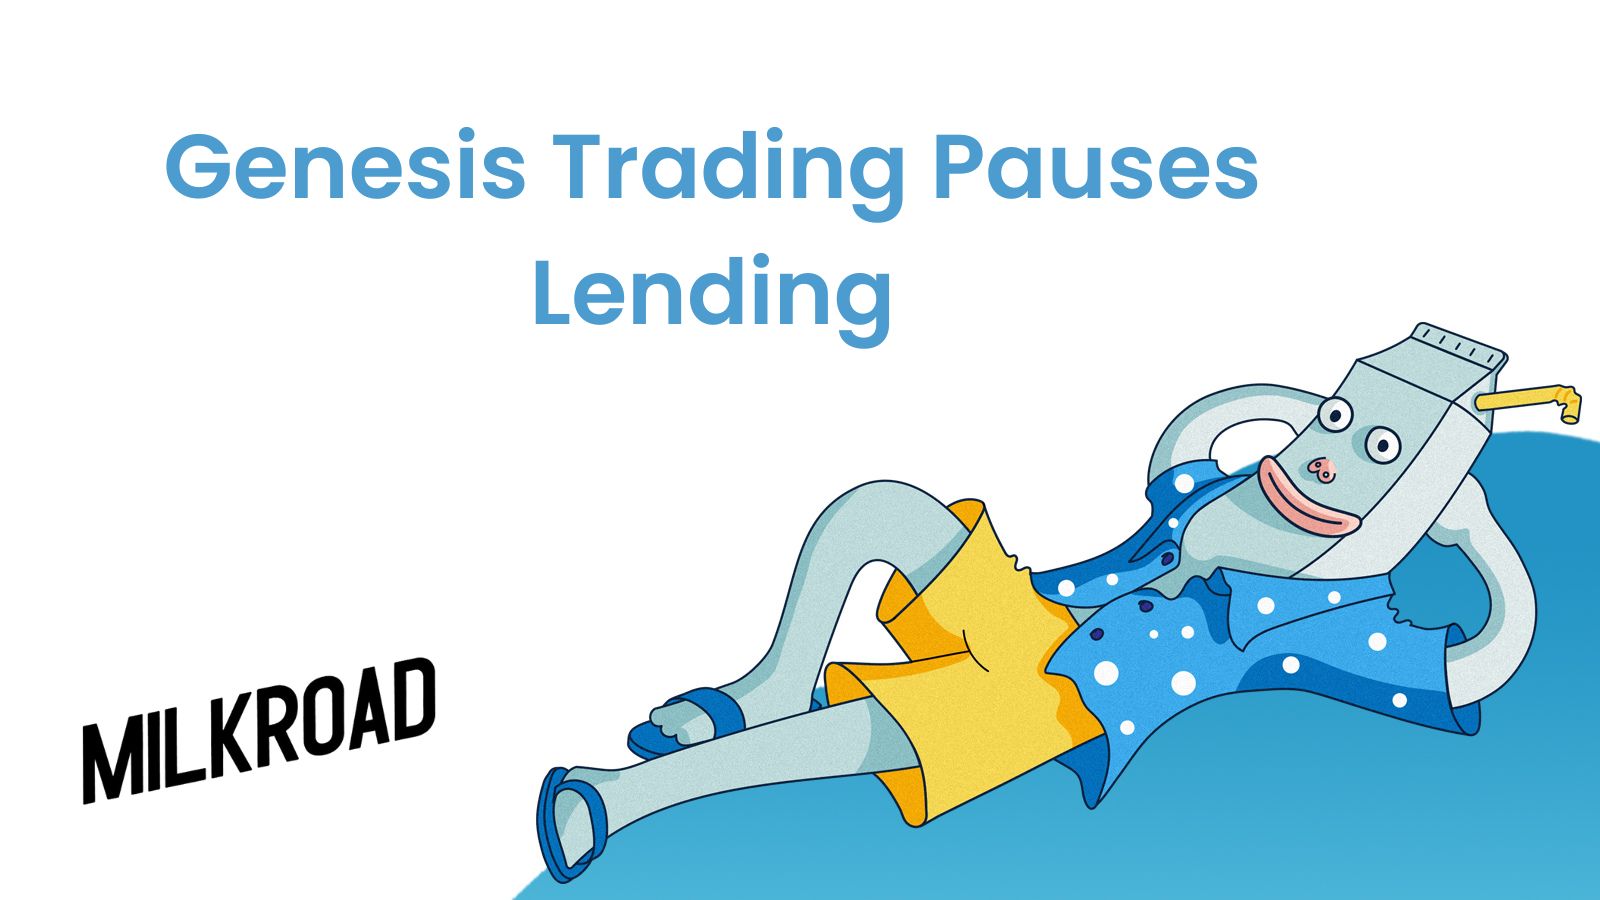 Genesis Trading Pauses Lending